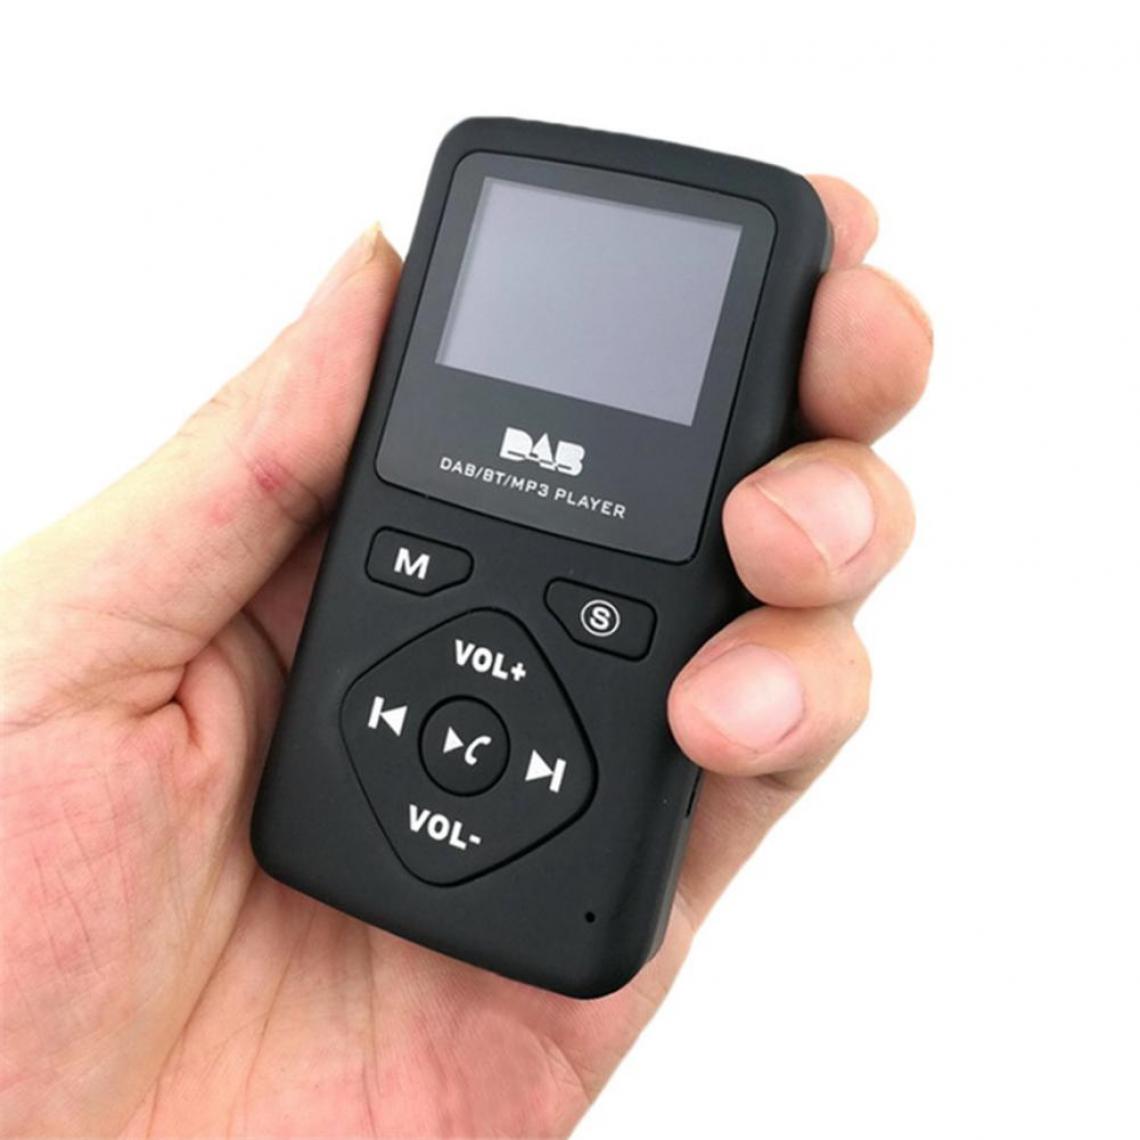 Universal - Portable Pocket Radio Digital Bluetooth MP3 Player for Randing Walking Sports with Headphones 174.928MHz 239.2MHz |(Le noir) - Radio